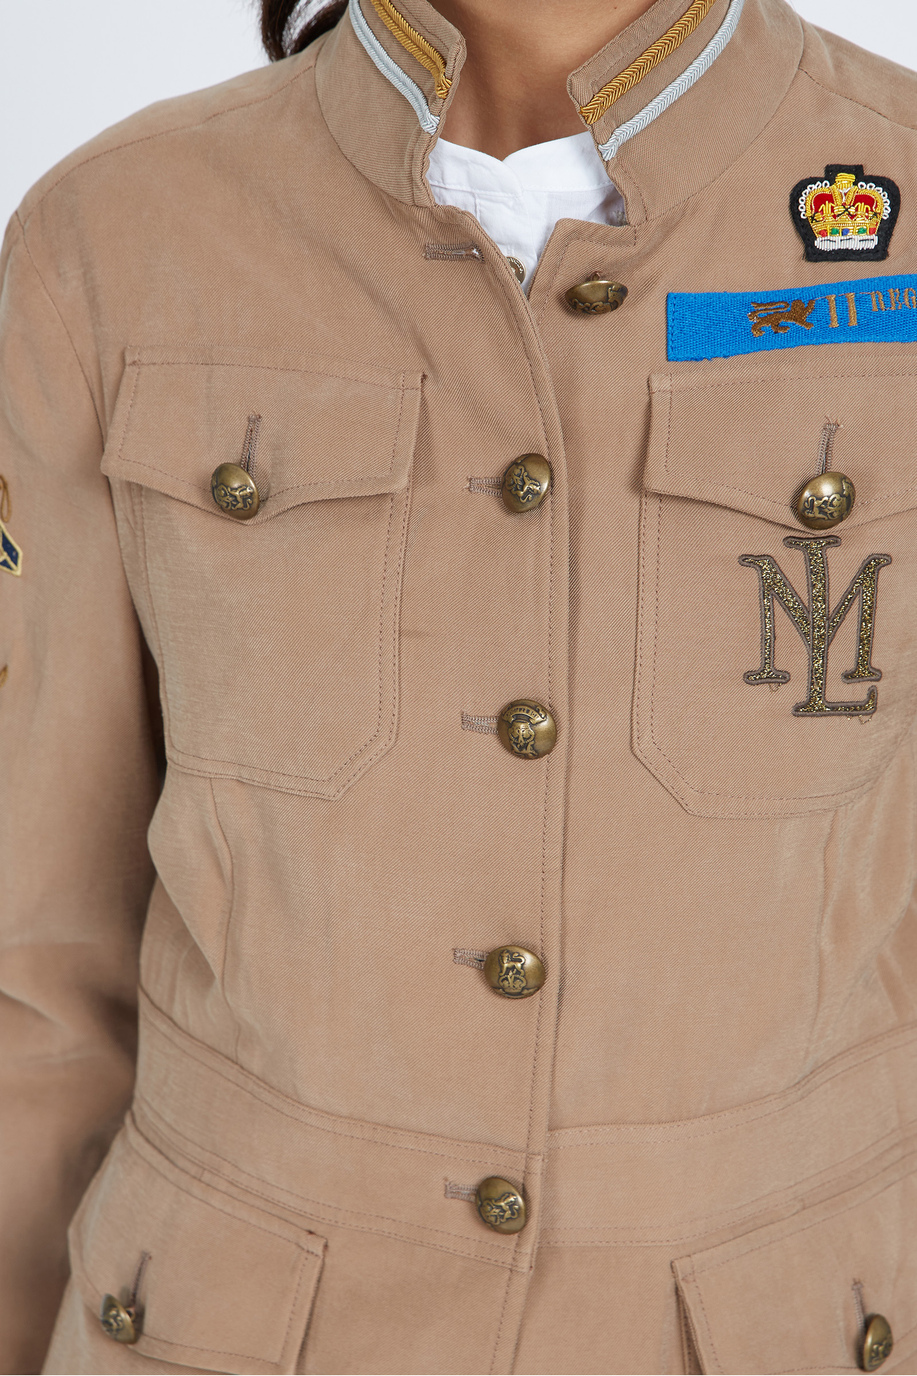 Damen-Jacke aus Viskose mit normaler Passform- Valery - Jacken | La Martina - Official Online Shop